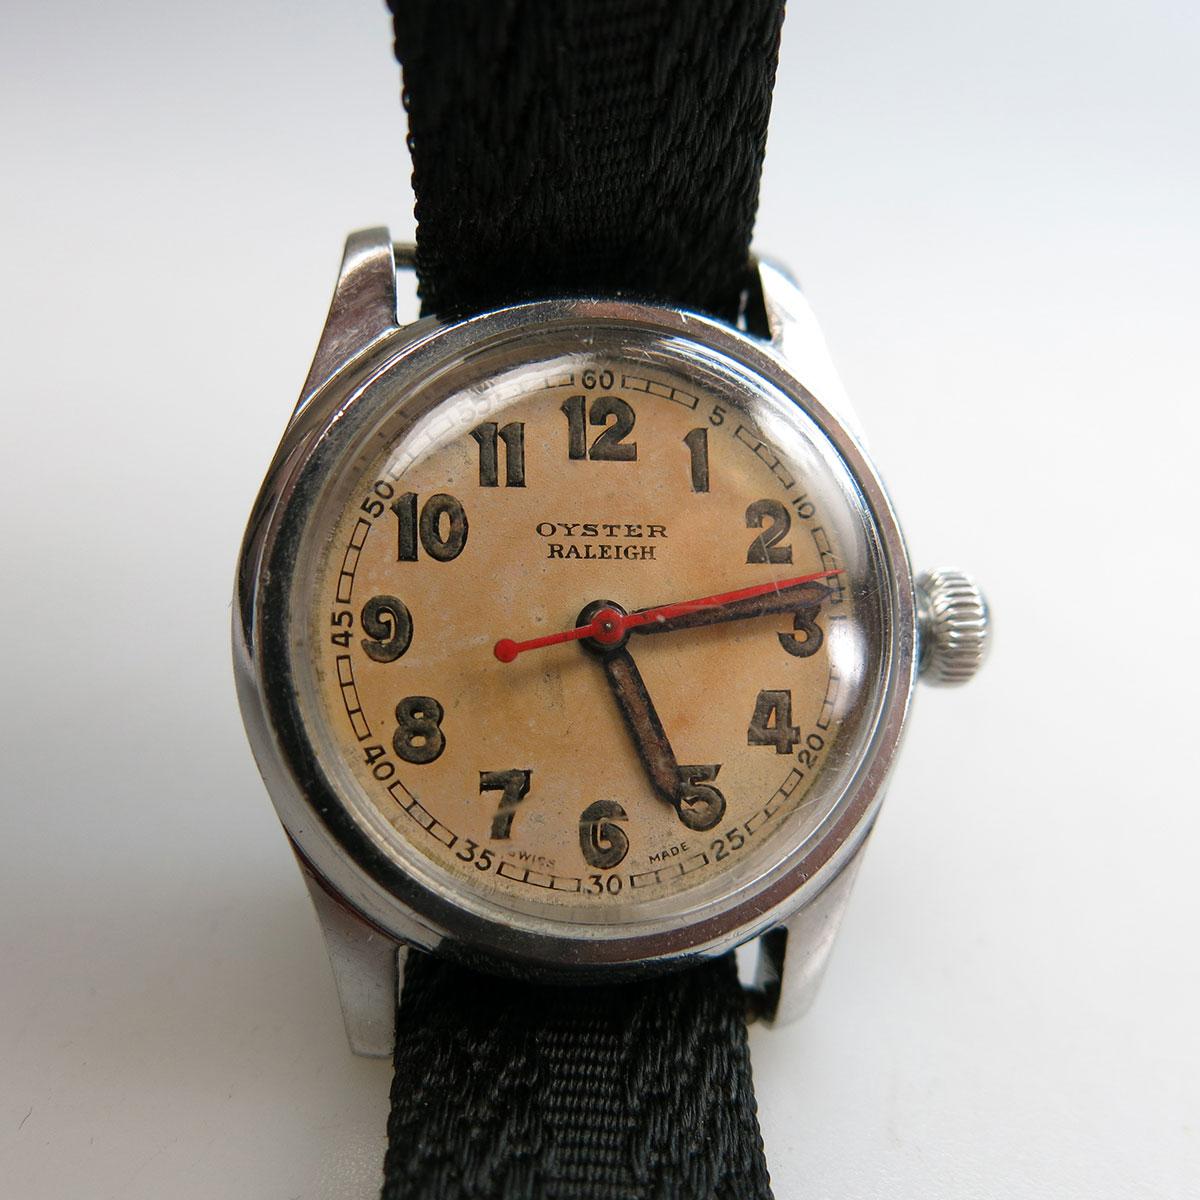 Oyster Raleigh Wristwatch